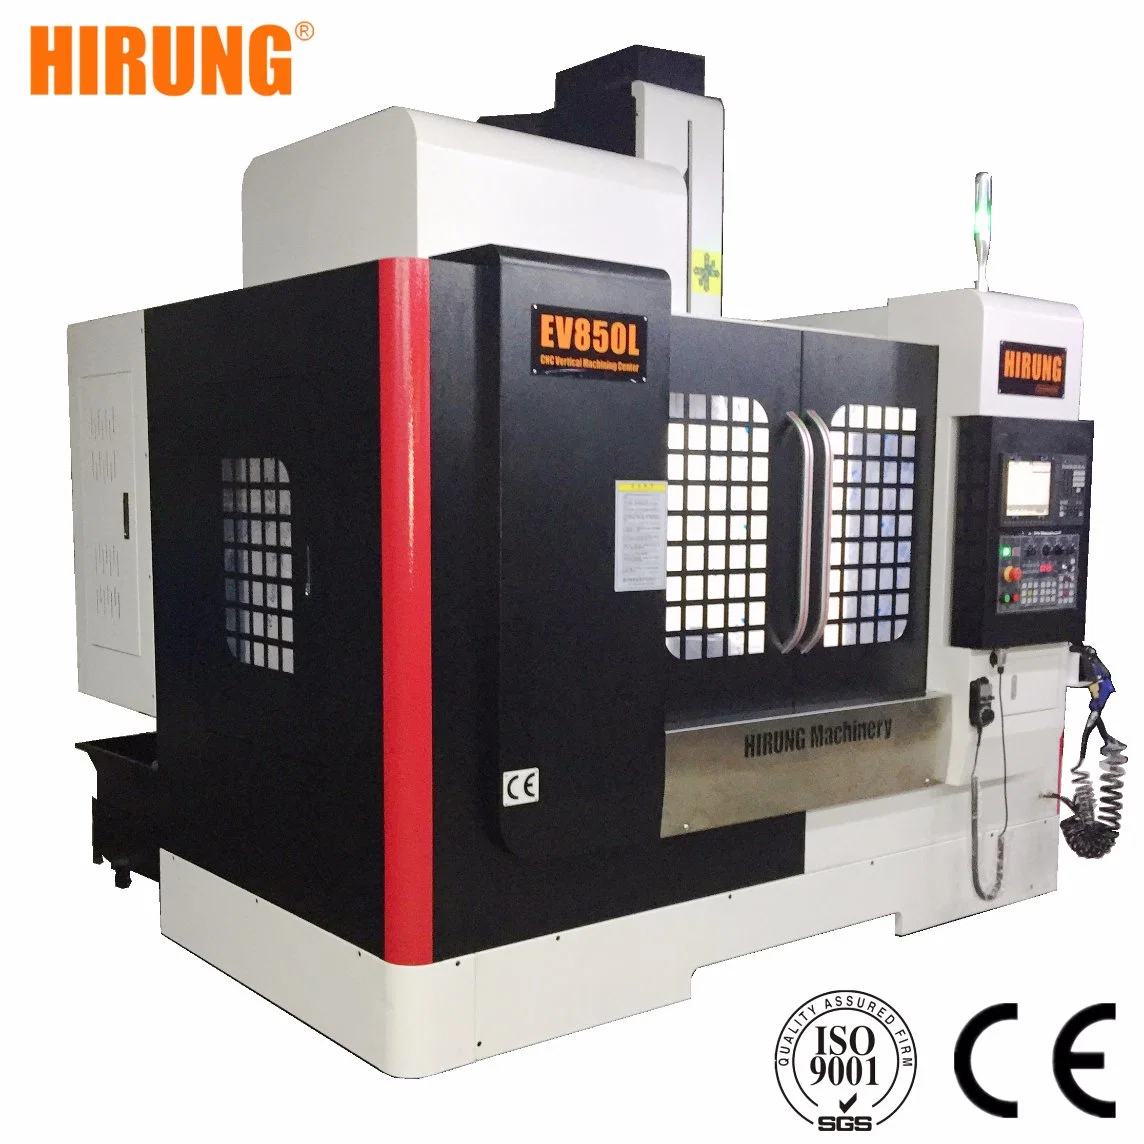 Vertical Milling Machine, CNC Vertical Milling Machine, Vertical Milling Machine Tool EV850L